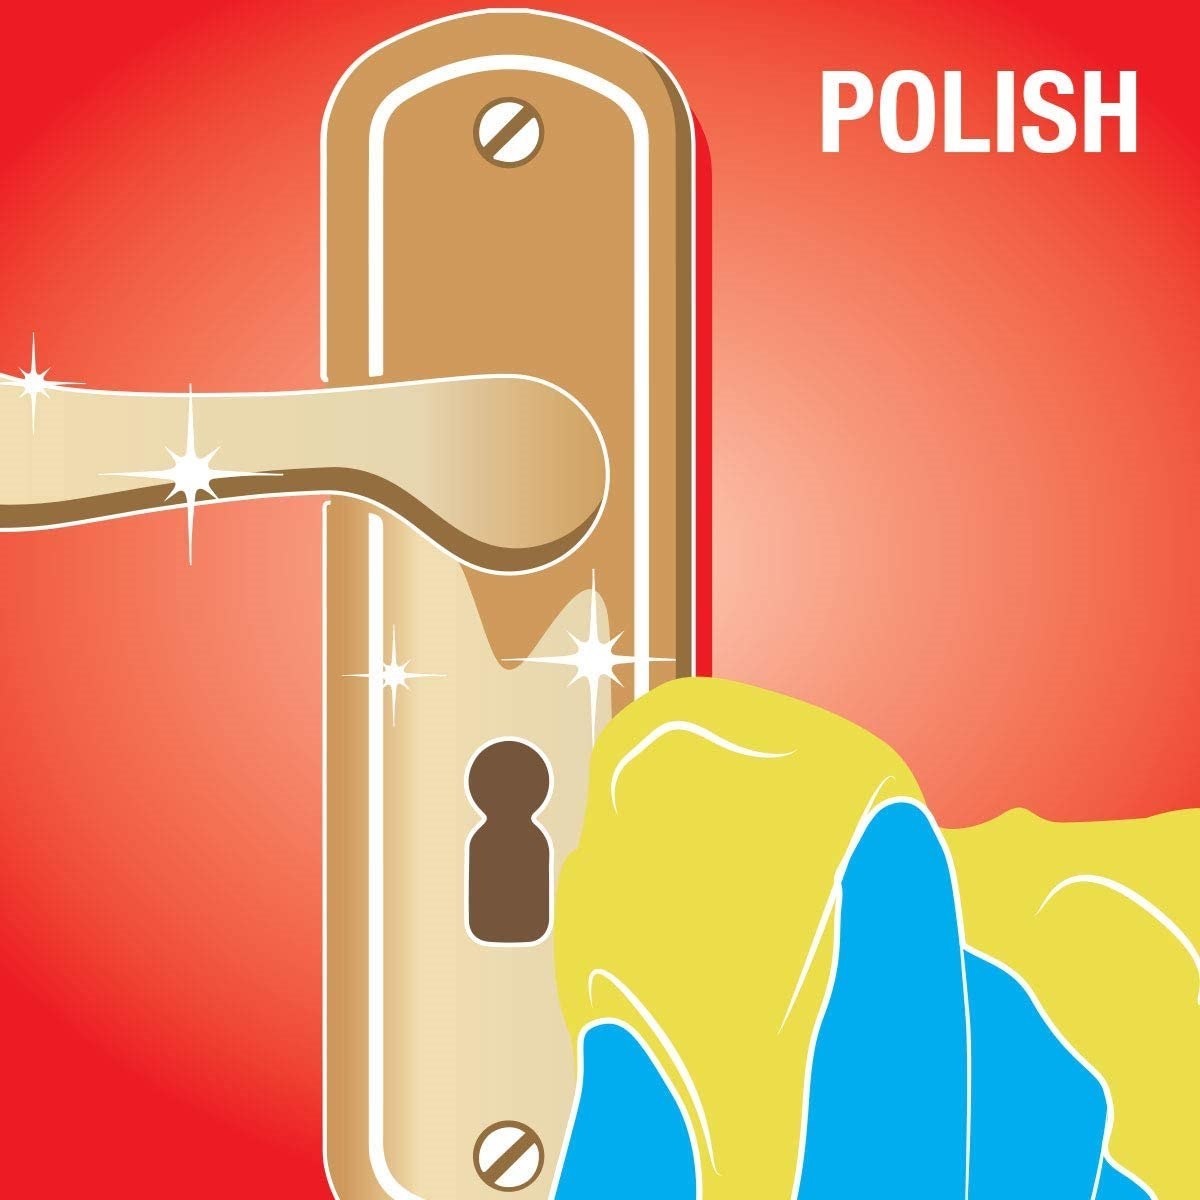 Brasso Wadding Polish